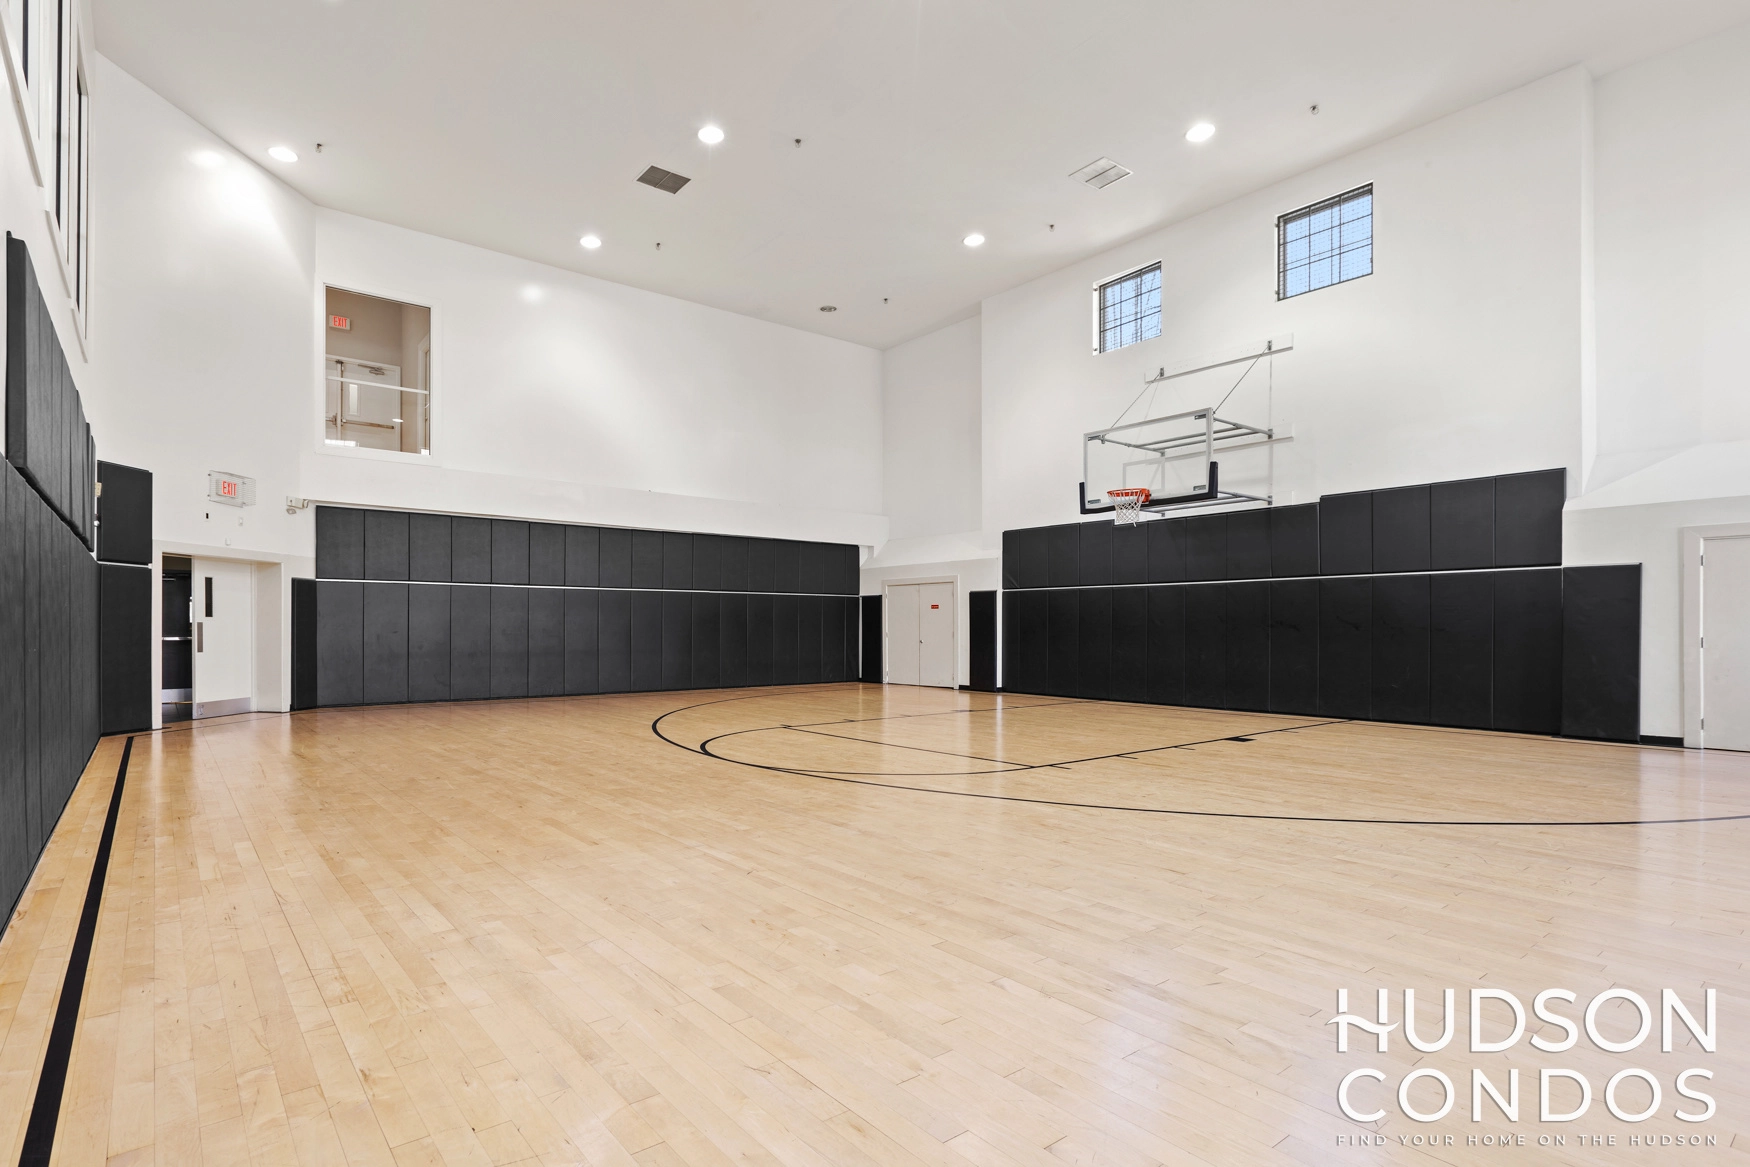 hduson club condos basketball court